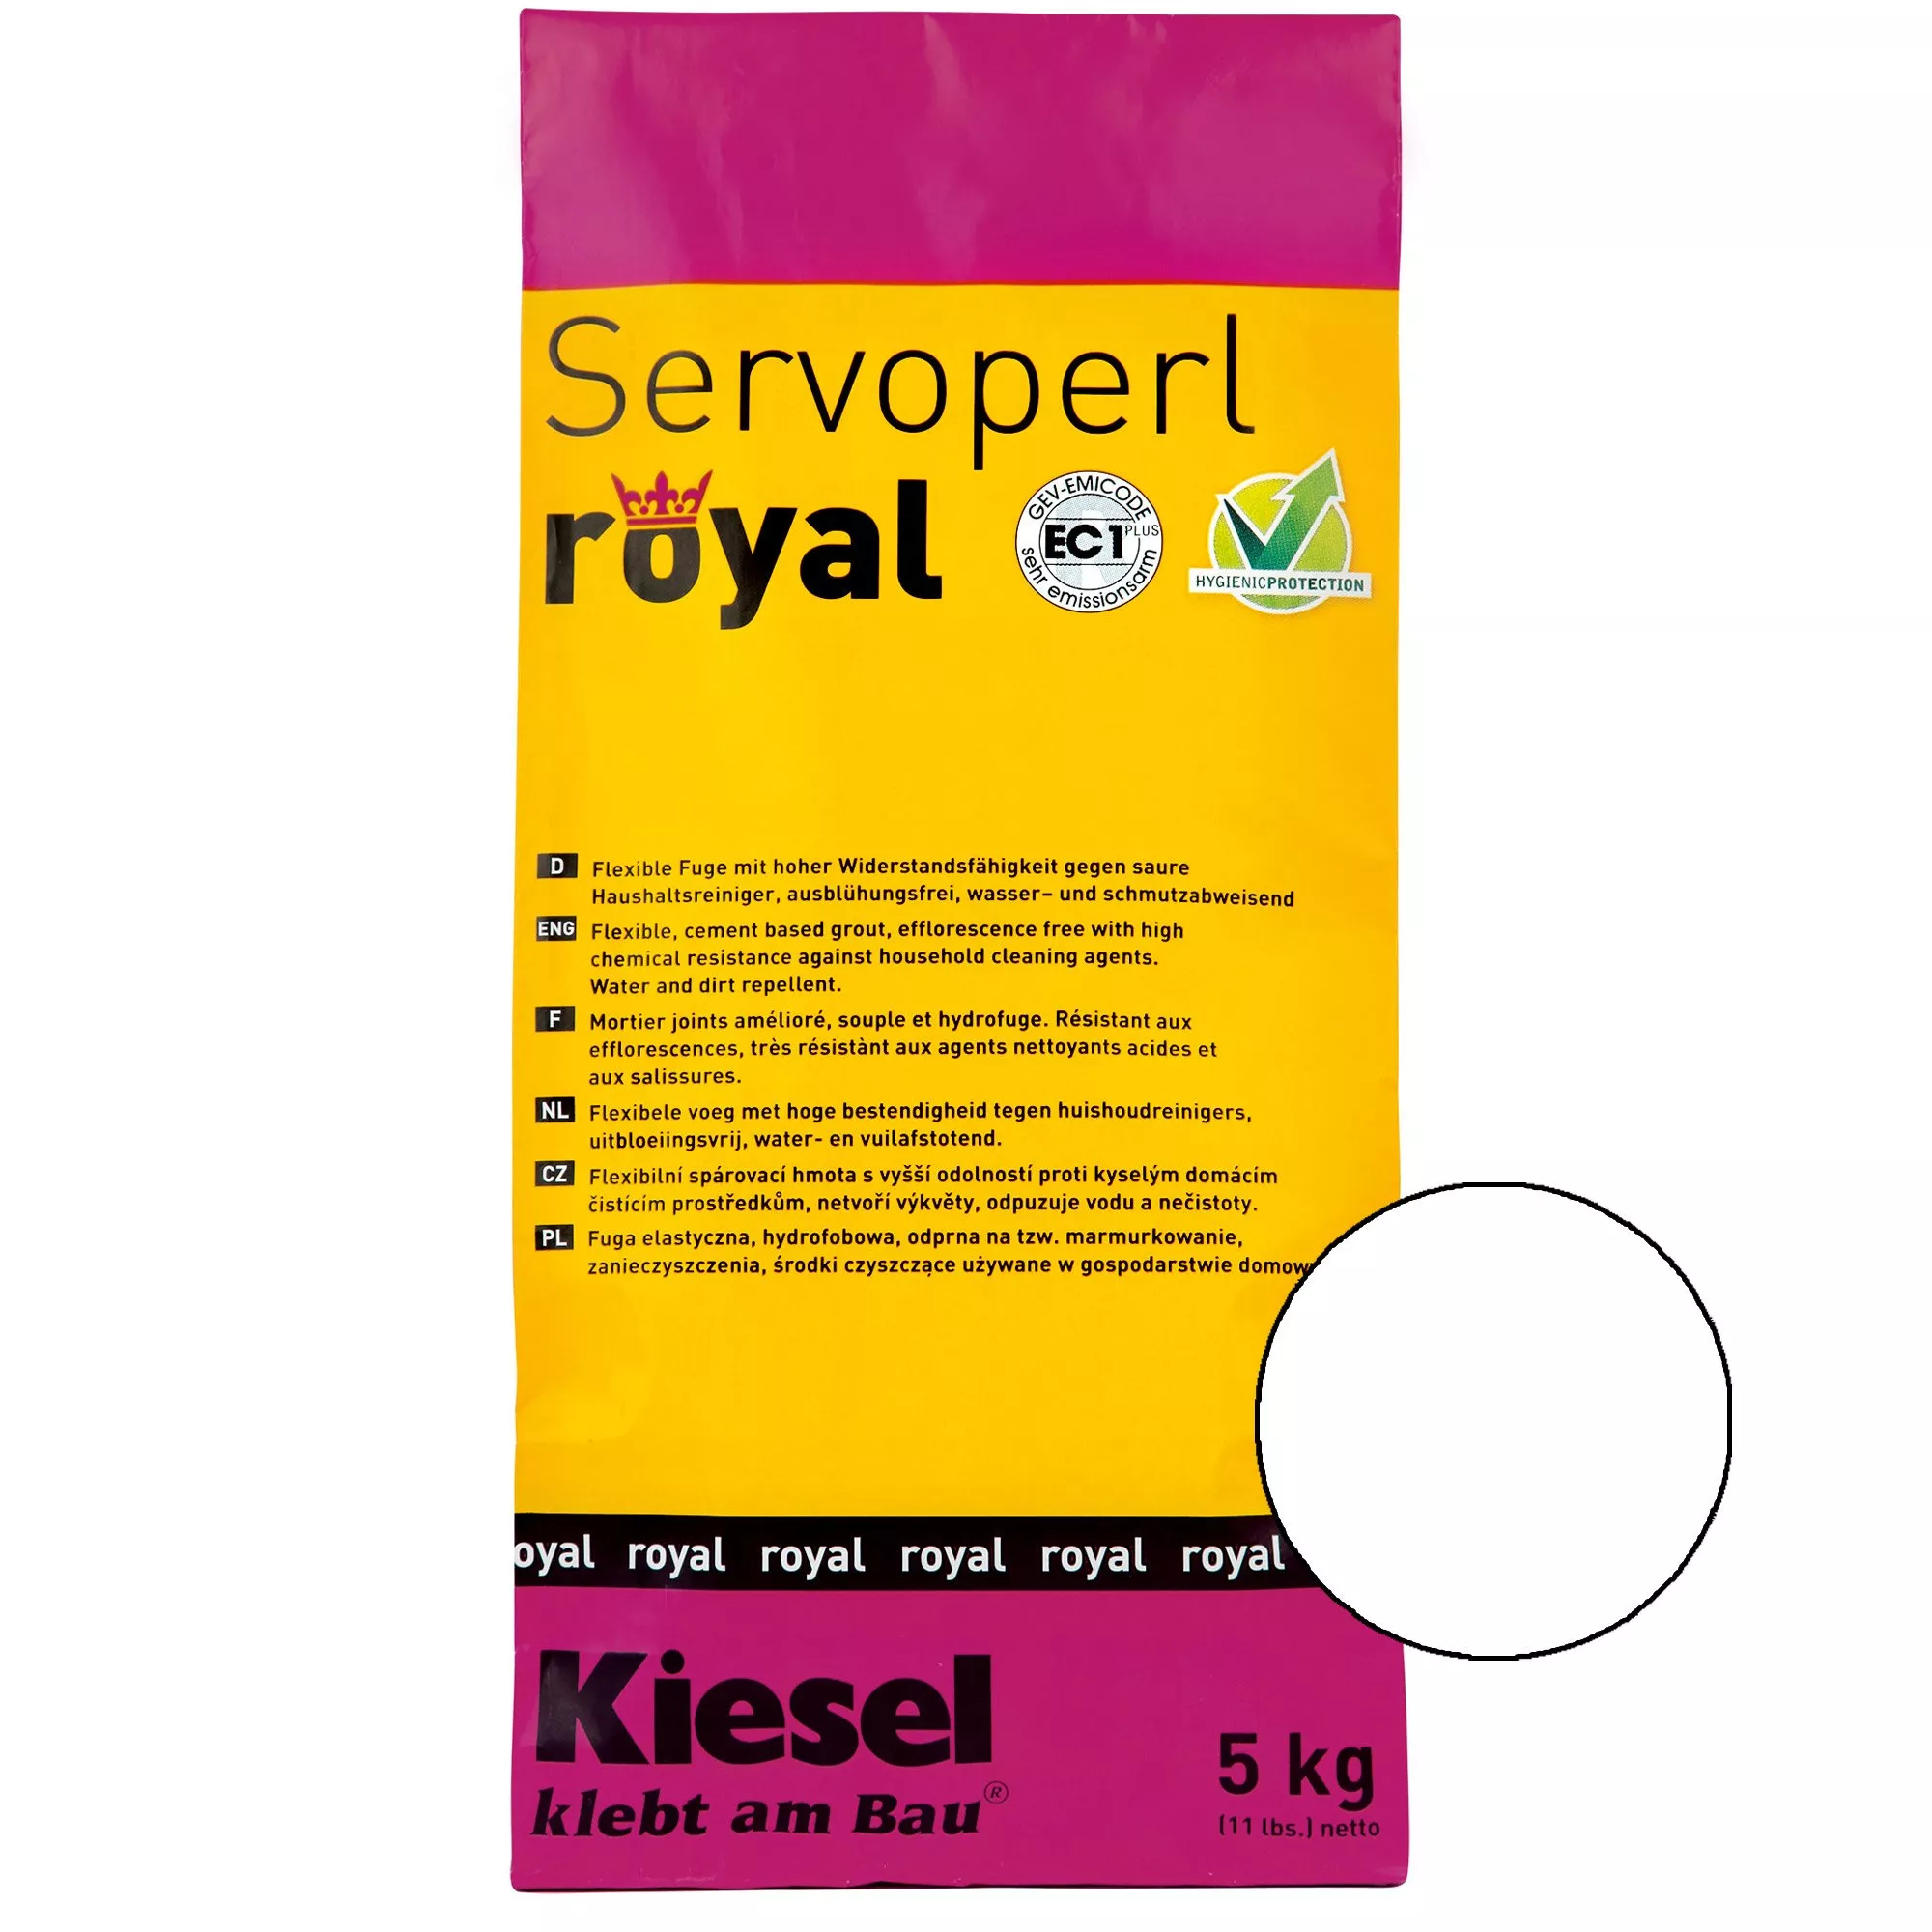 Kiesel Servoperl Royal - Elastyczna, Odporna Na Wodę I Brud Spoina (5KG Biała)